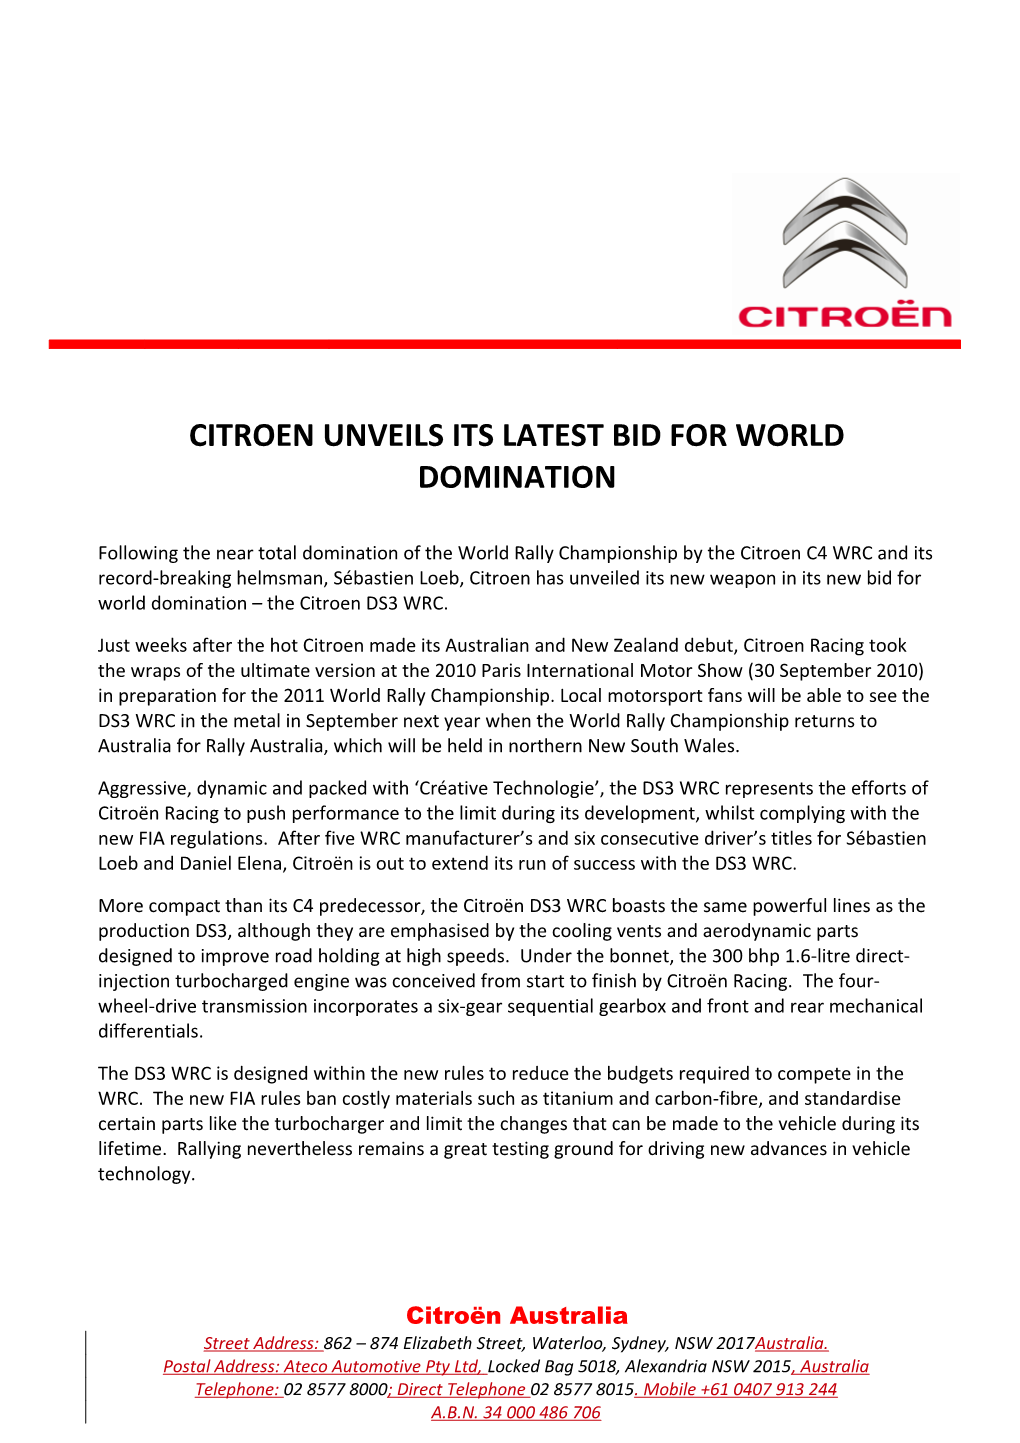 Citroen Unveils Its Latest Bid for World Domination